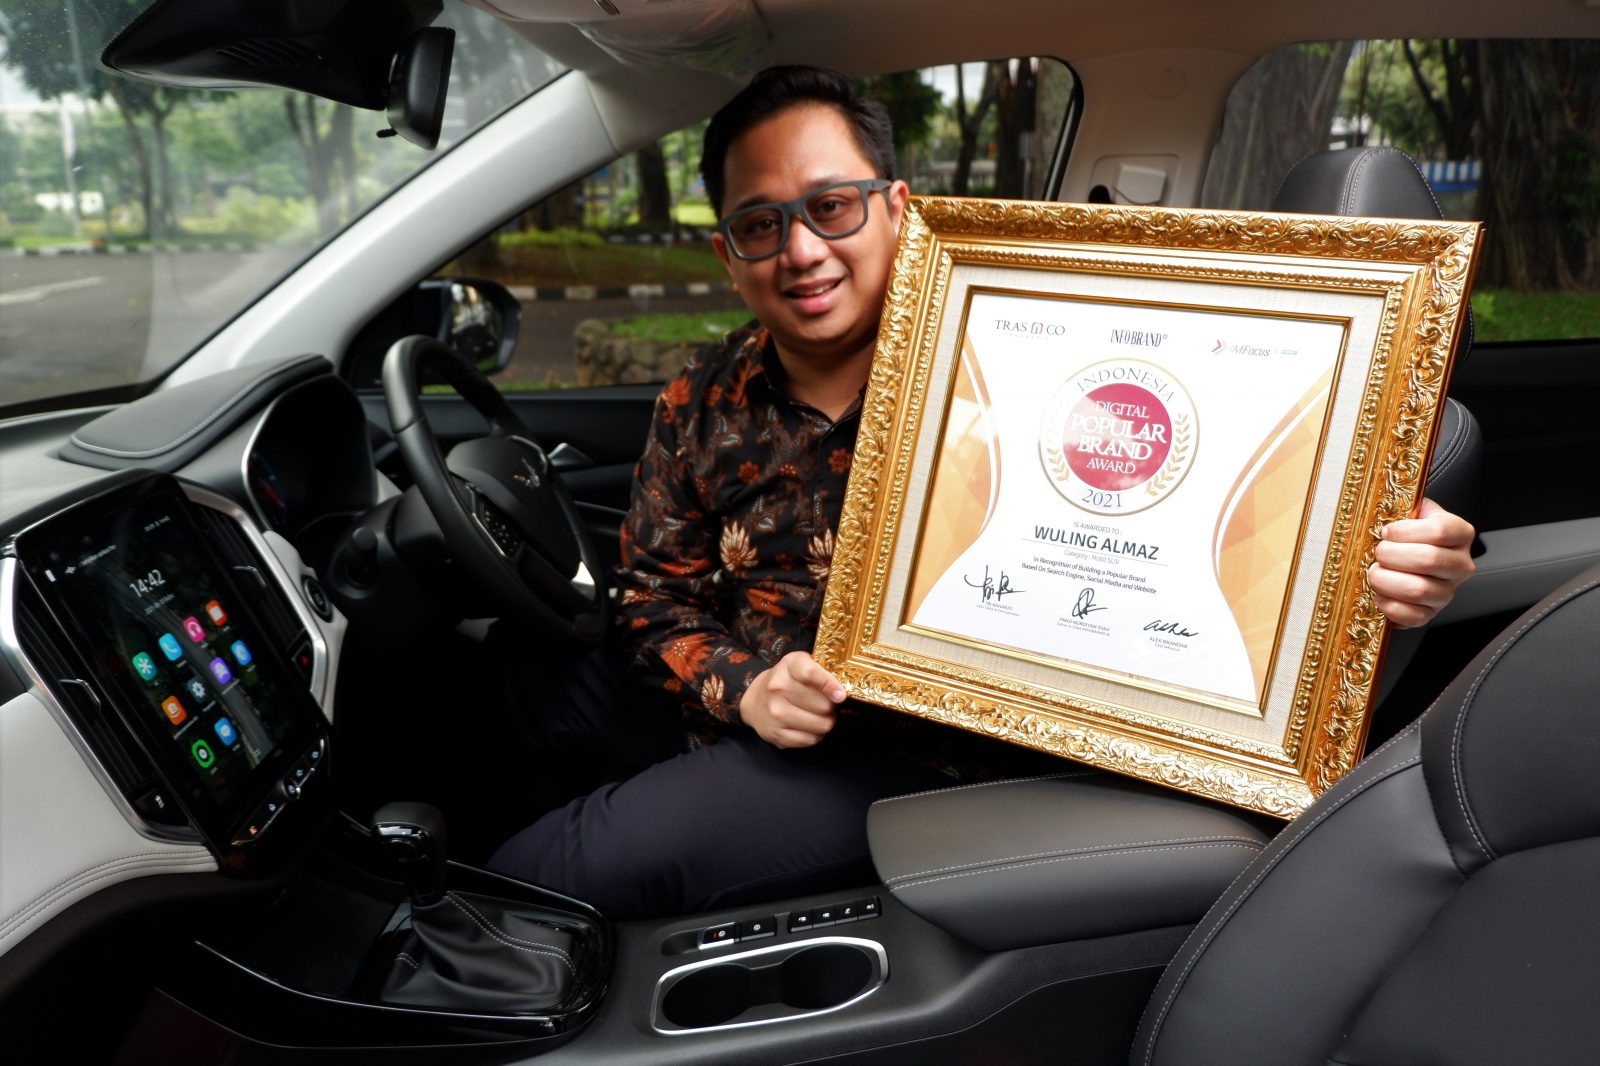 Image Wuling Almaz is Awarded The Indonesia Digital Popular Brand Award 2021